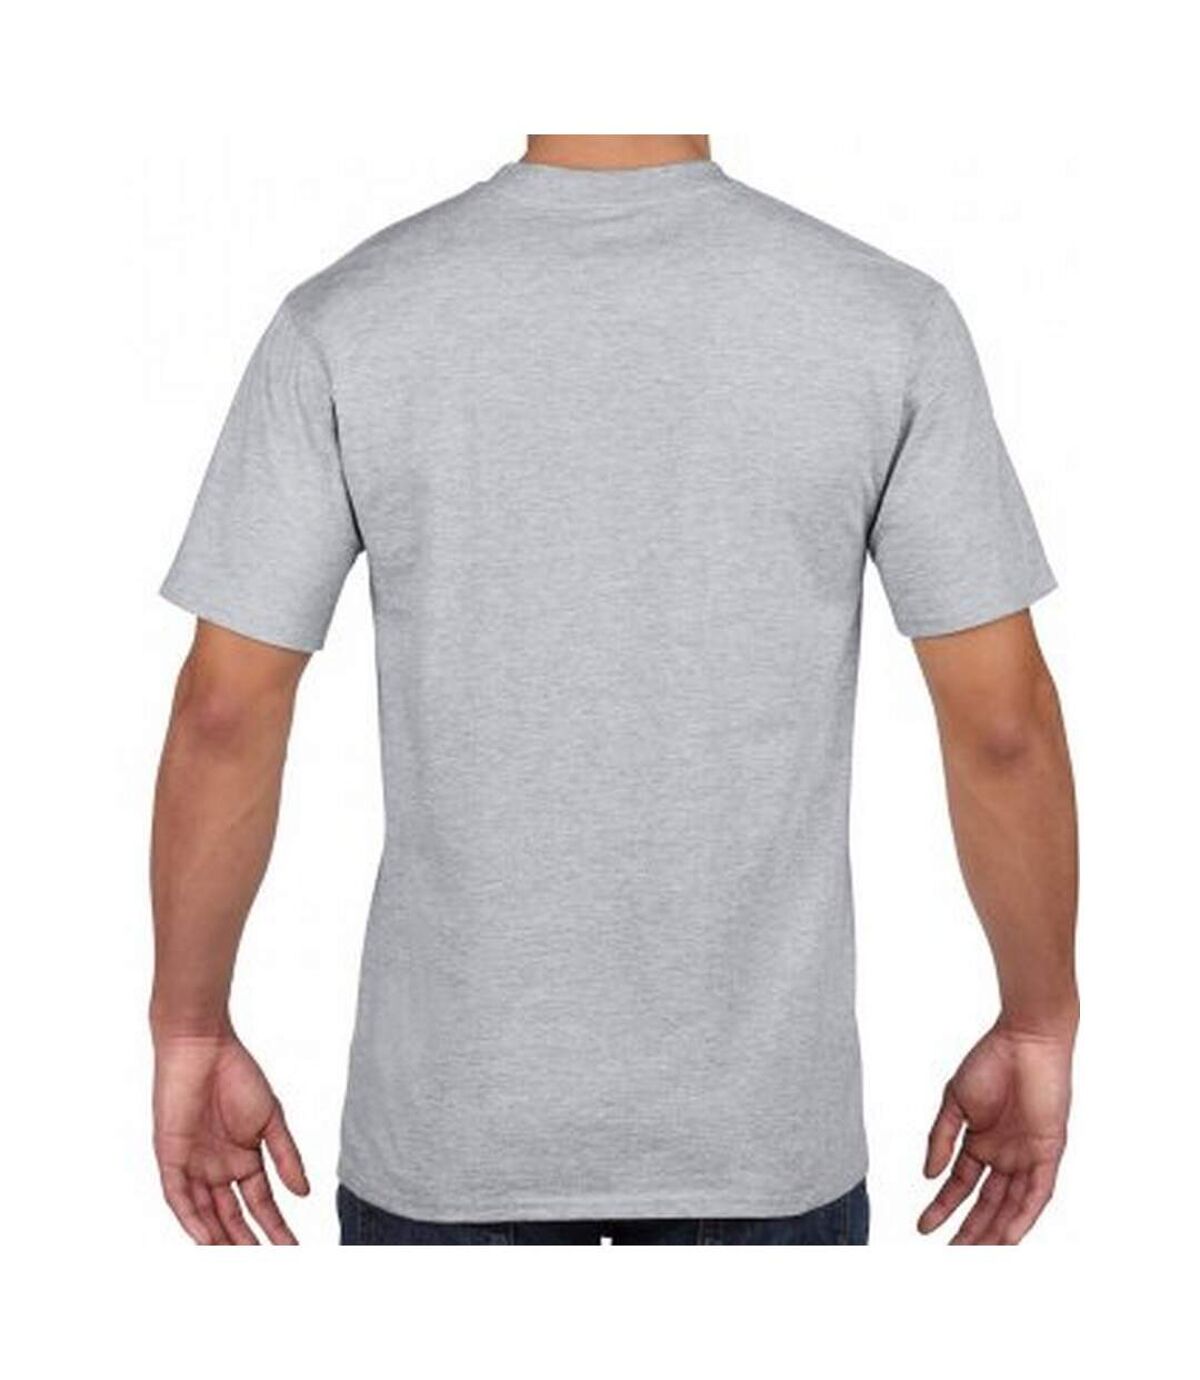 Gildan Mens Premium Cotton T-Shirt (Sport Gray)